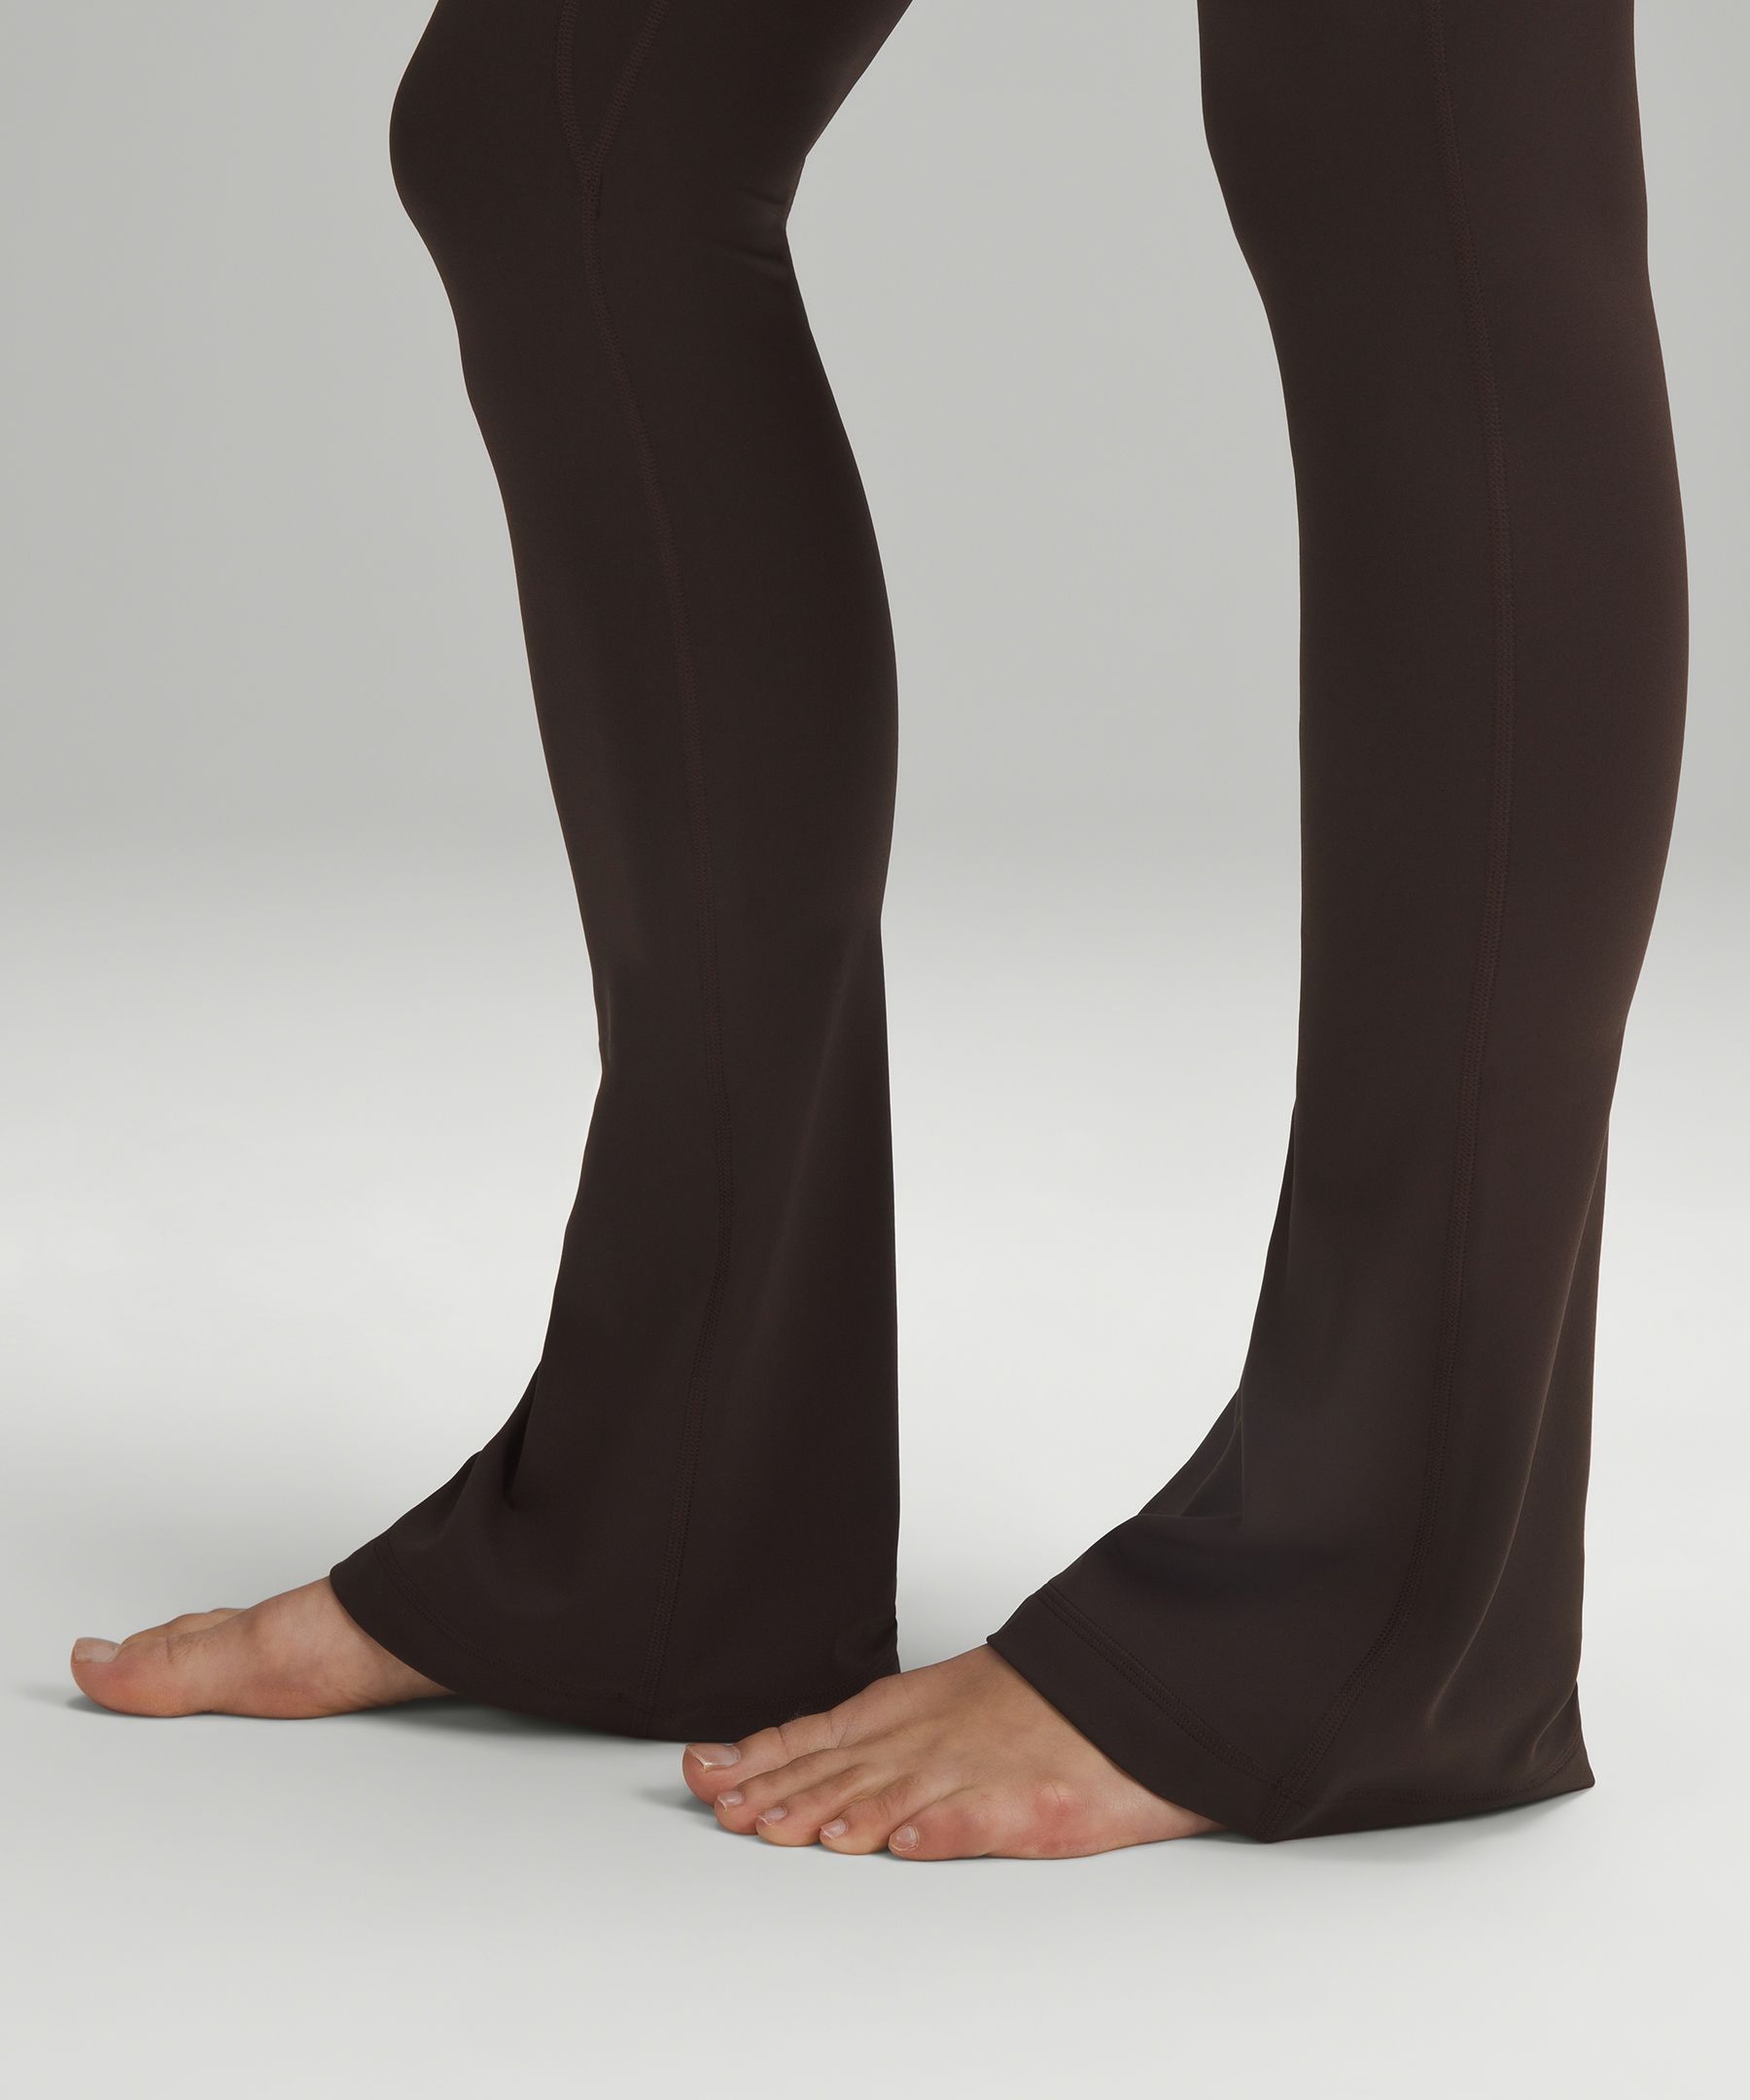 Lululemon Black Flare Leggings Size 4 - $42 - From Hallee